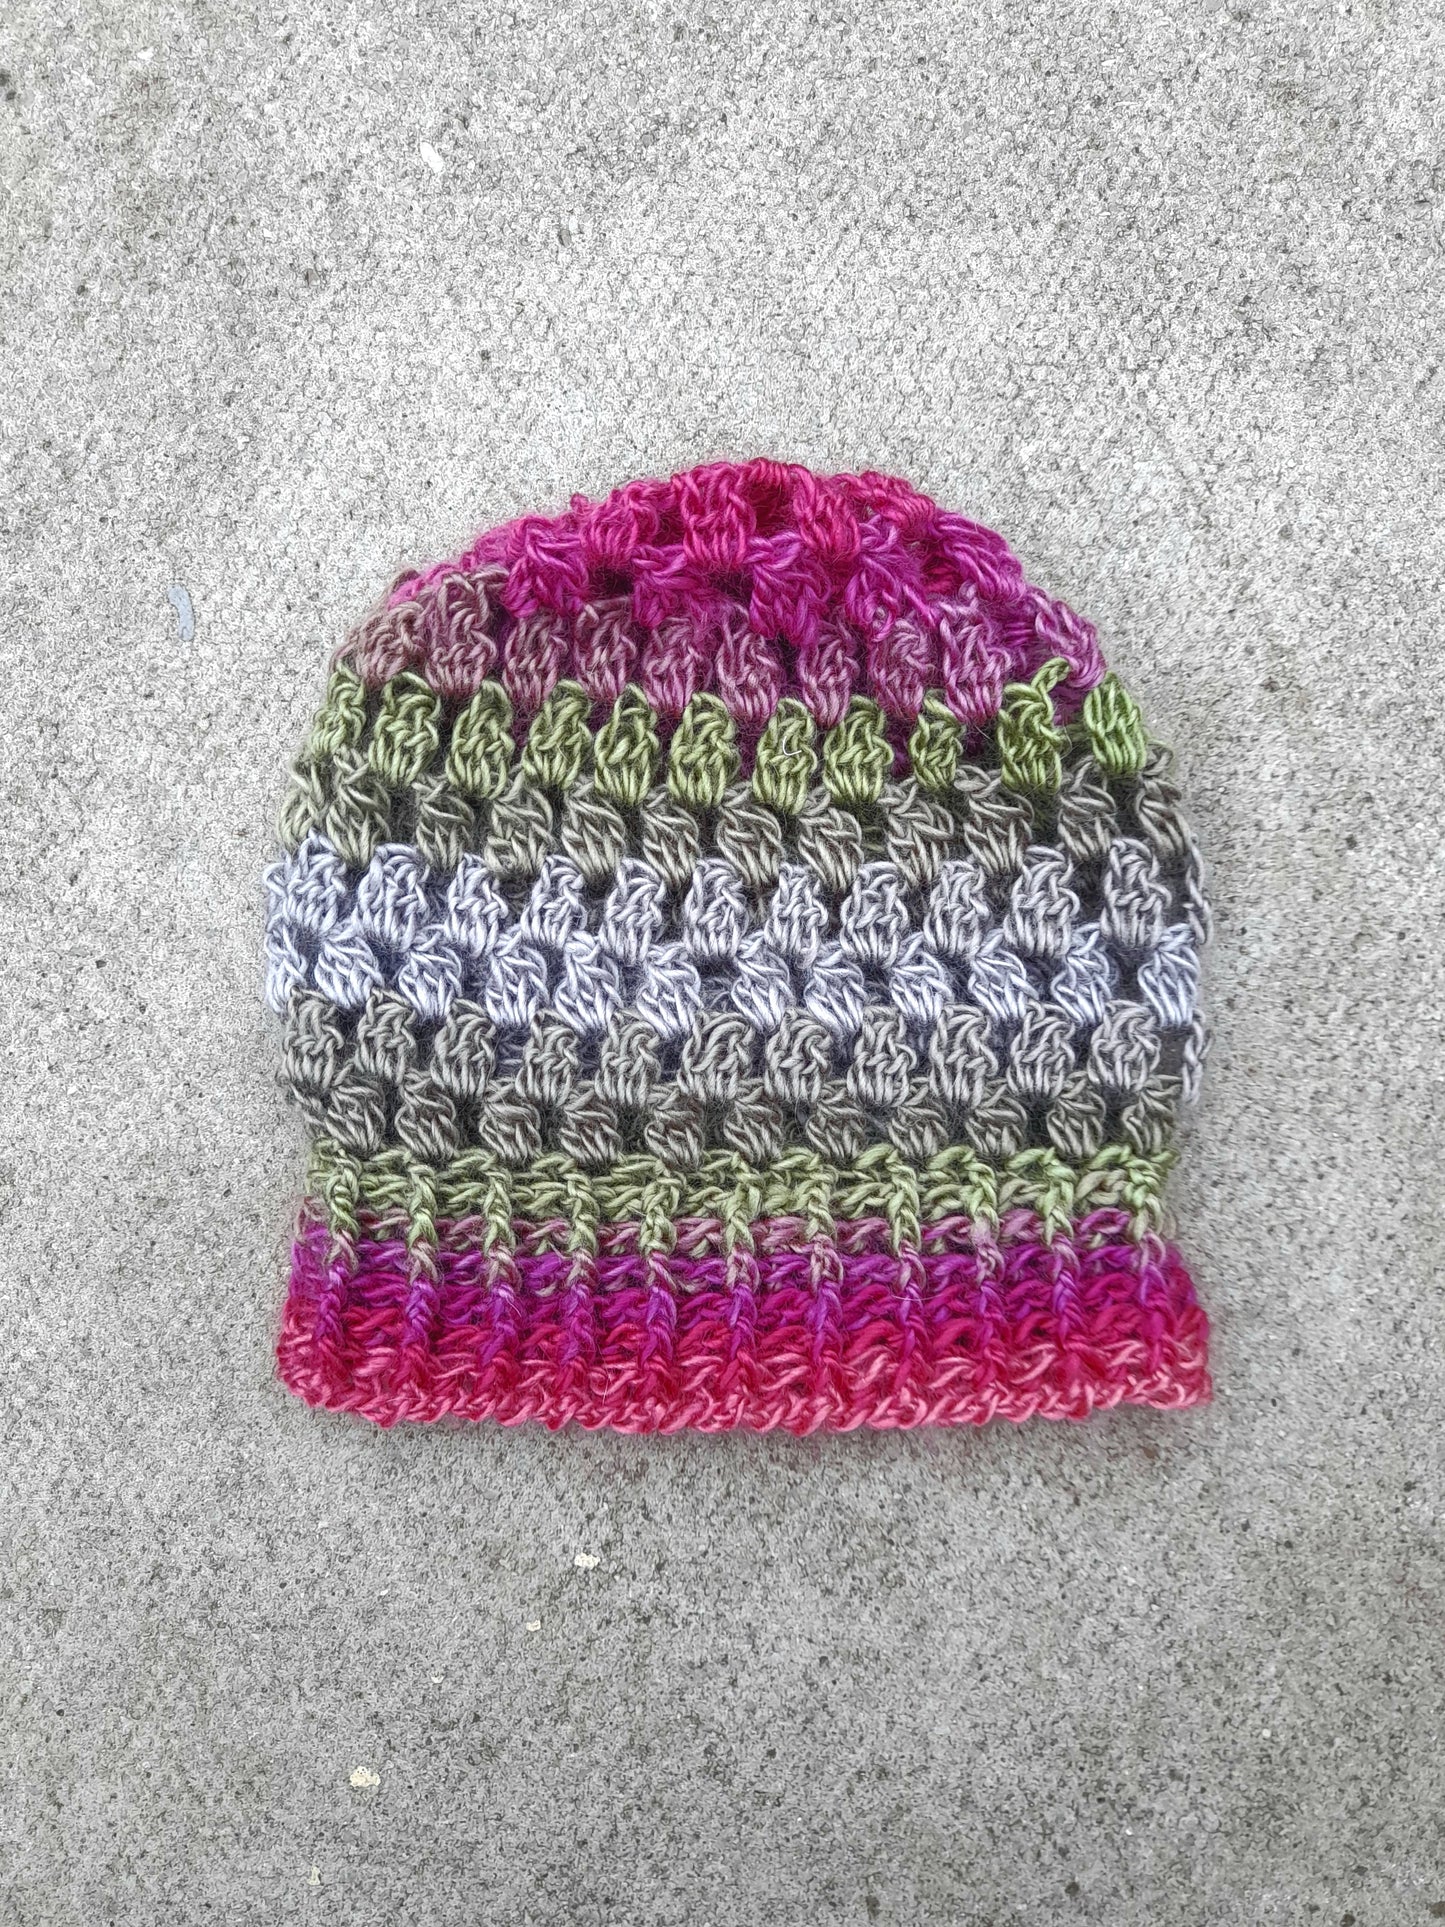 Granny stripe cluster beanie hat pattern. 